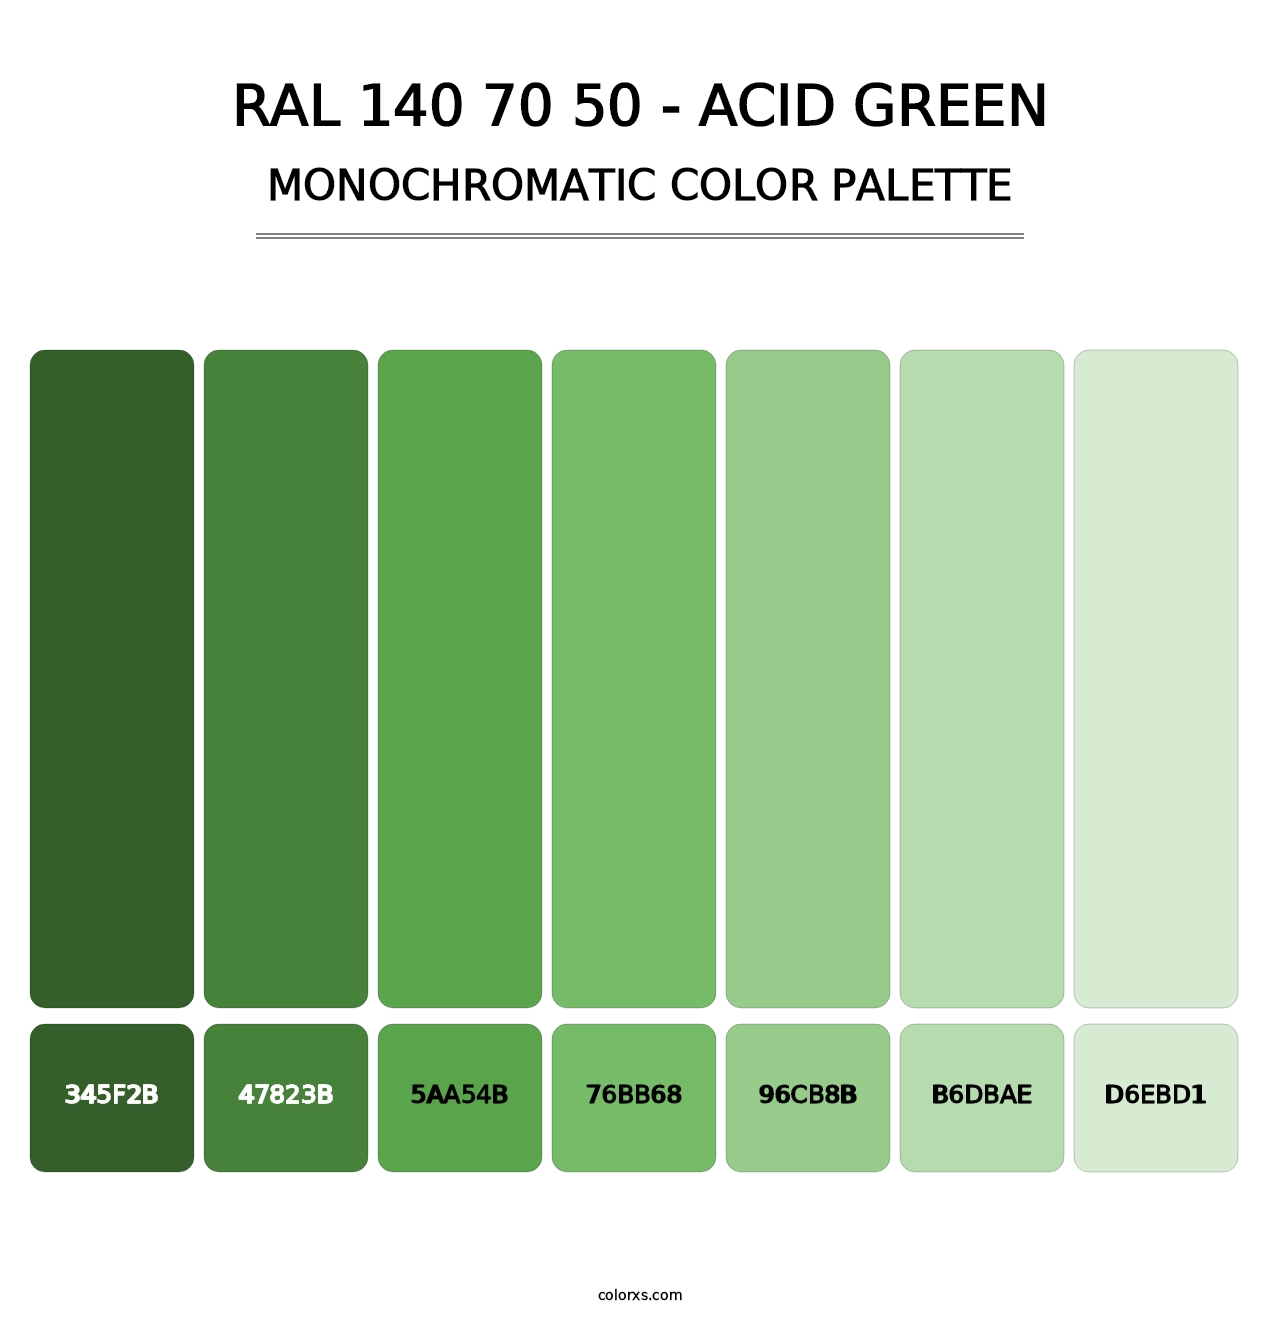 RAL 140 70 50 - Acid Green - Monochromatic Color Palette